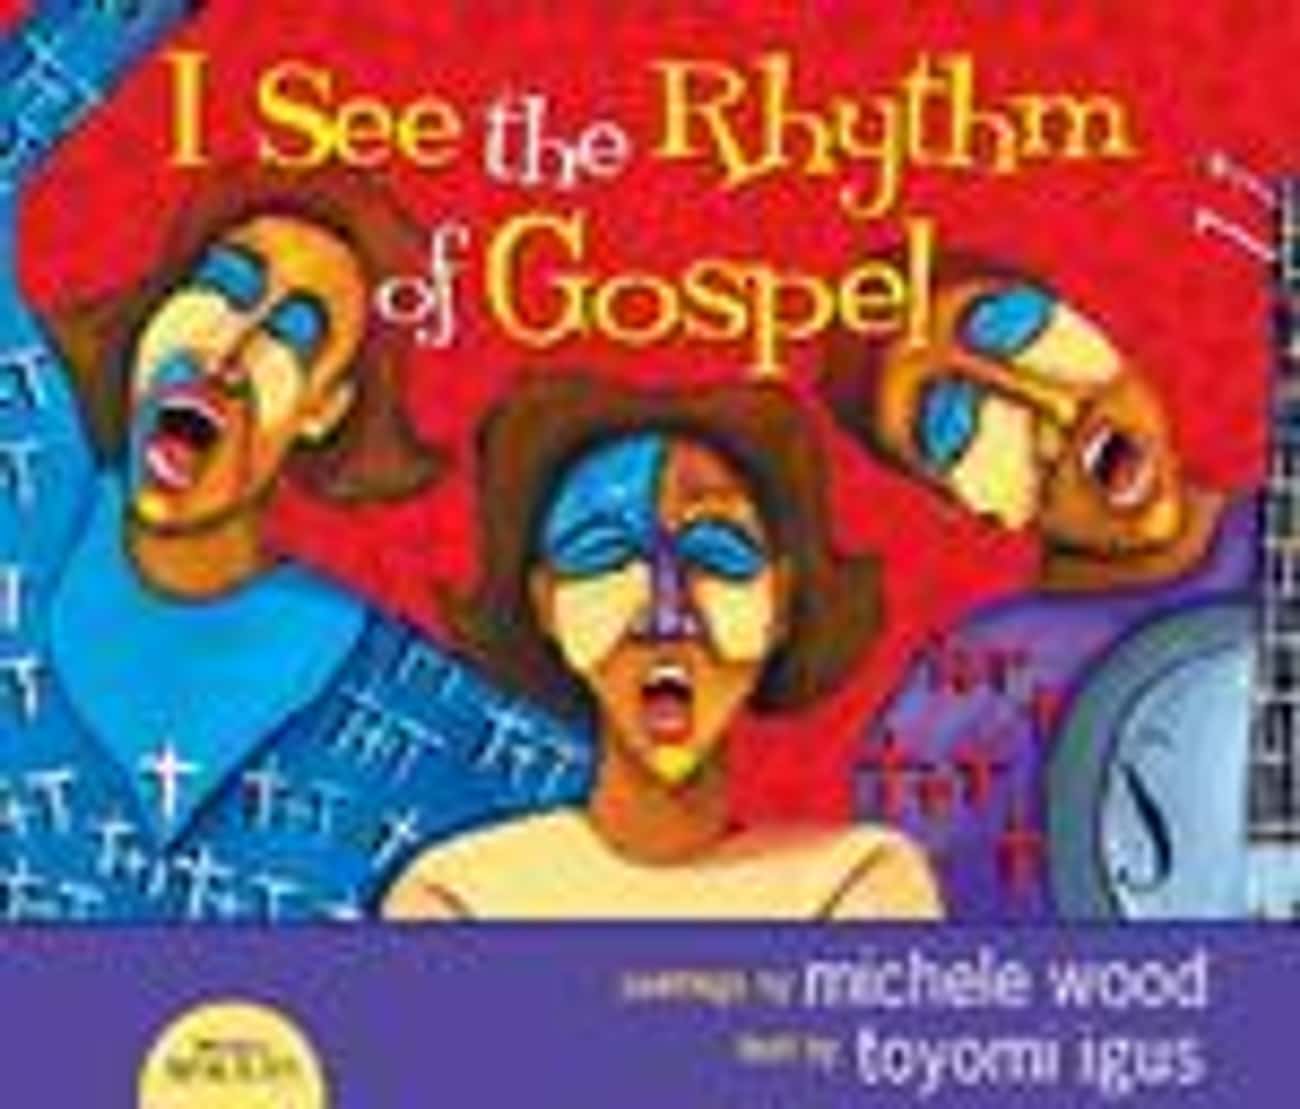 I See the Rhythm of Gospel by Michele Wood